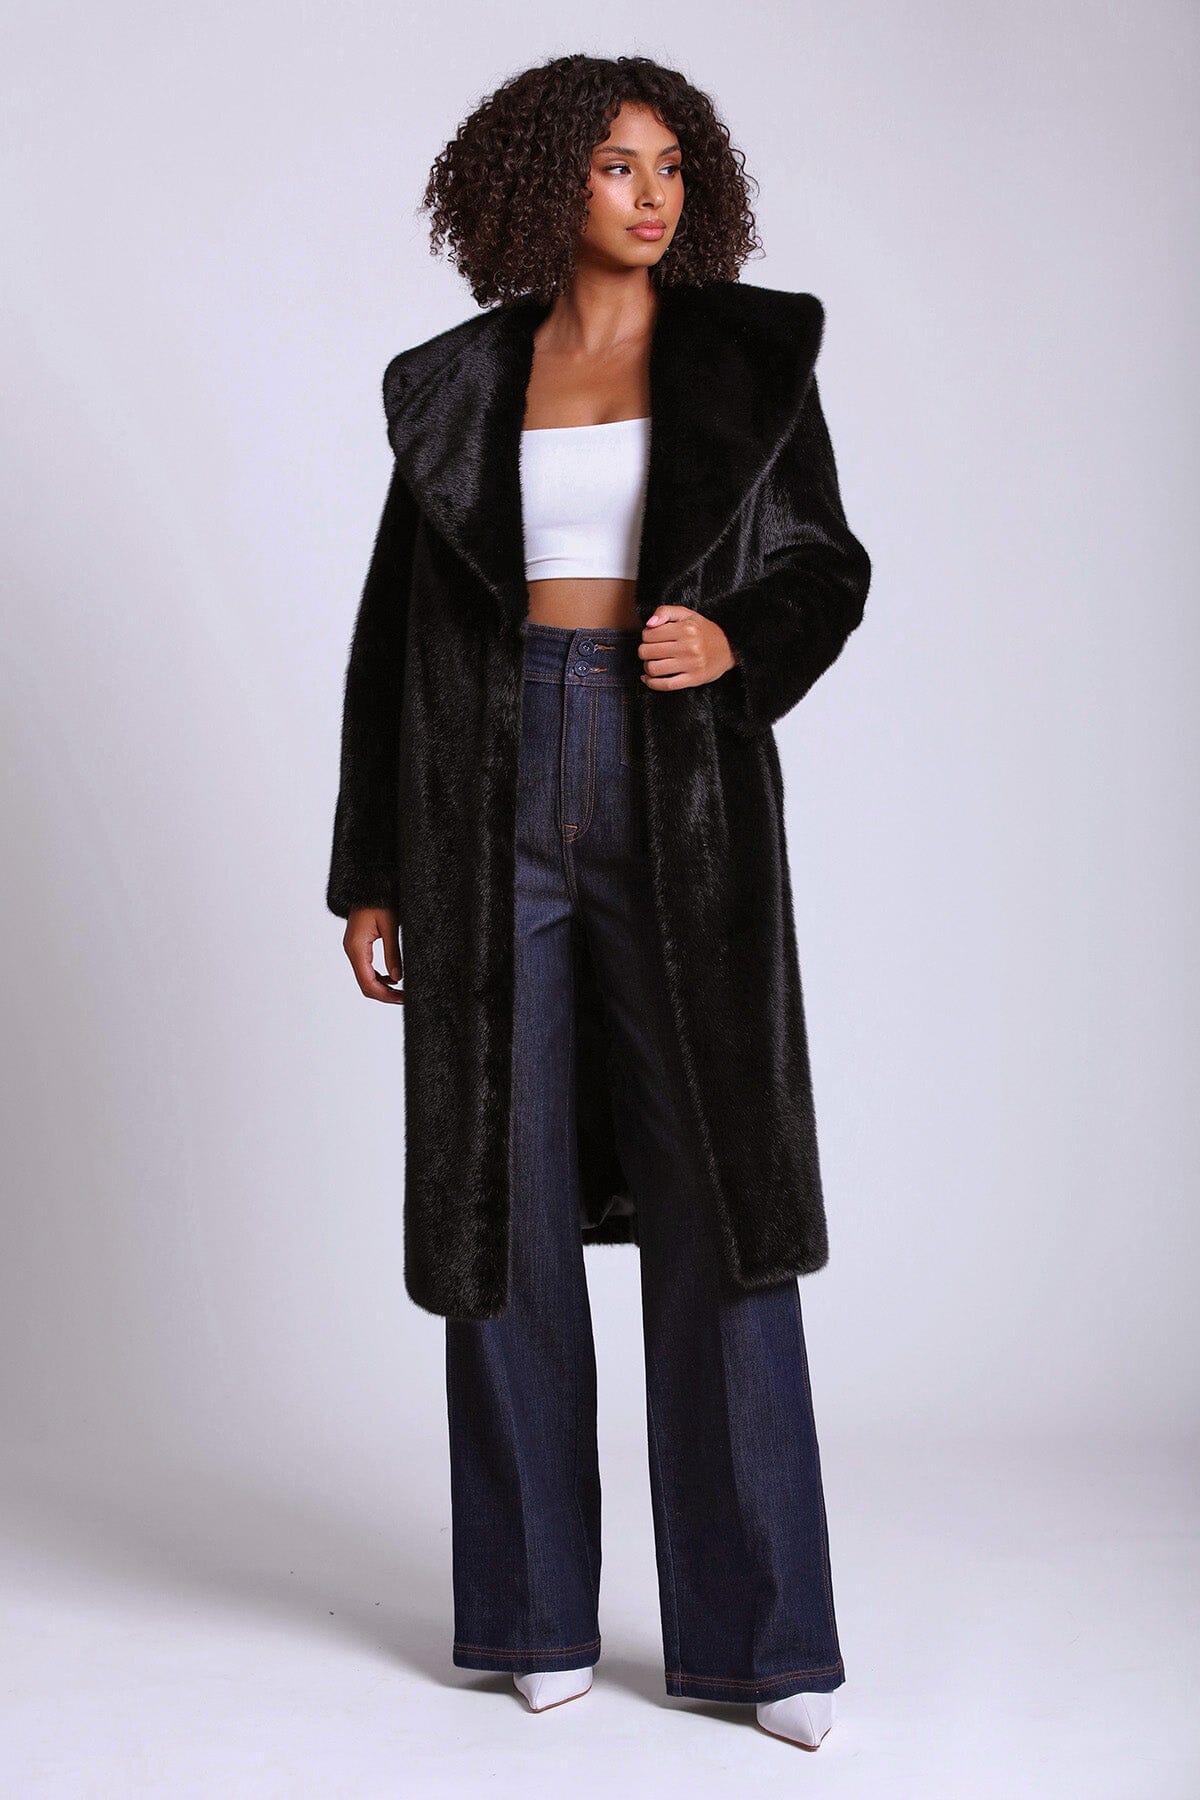 Black shawl collar faux fur long coat jacket - figure flattering day to night coats jackets for women